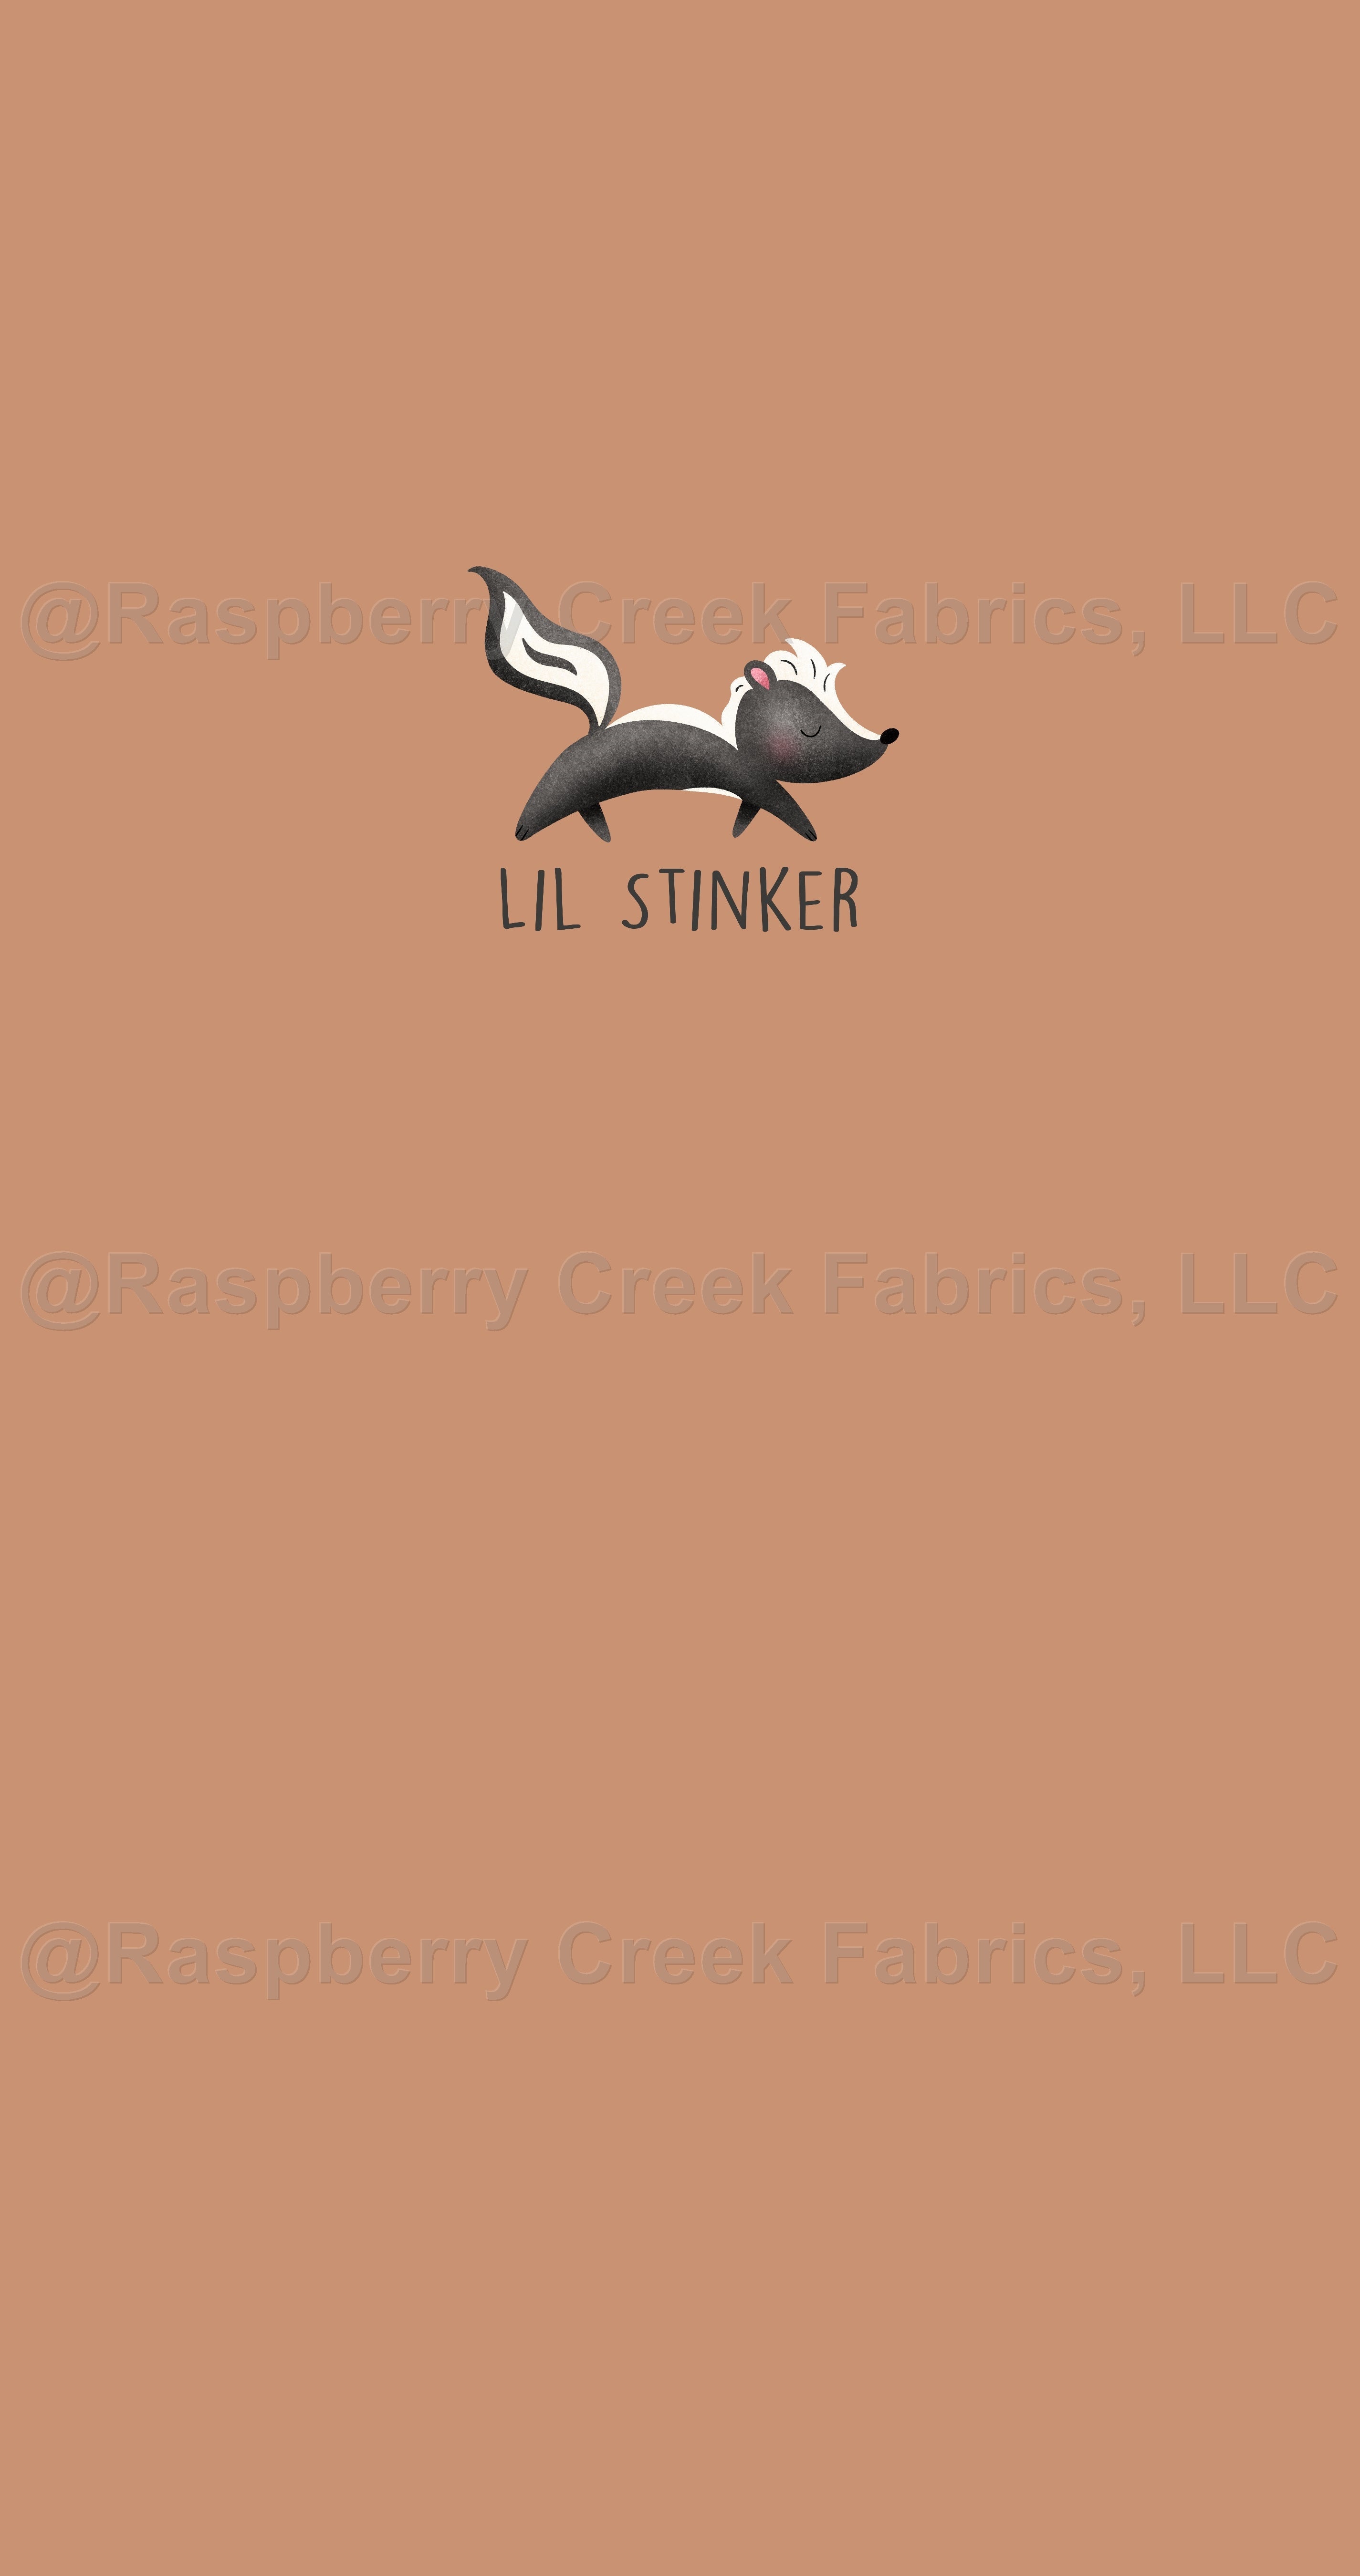 Fall Y'all Panel- Lil Stinker Fabric, Raspberry Creek Fabrics, watermarked